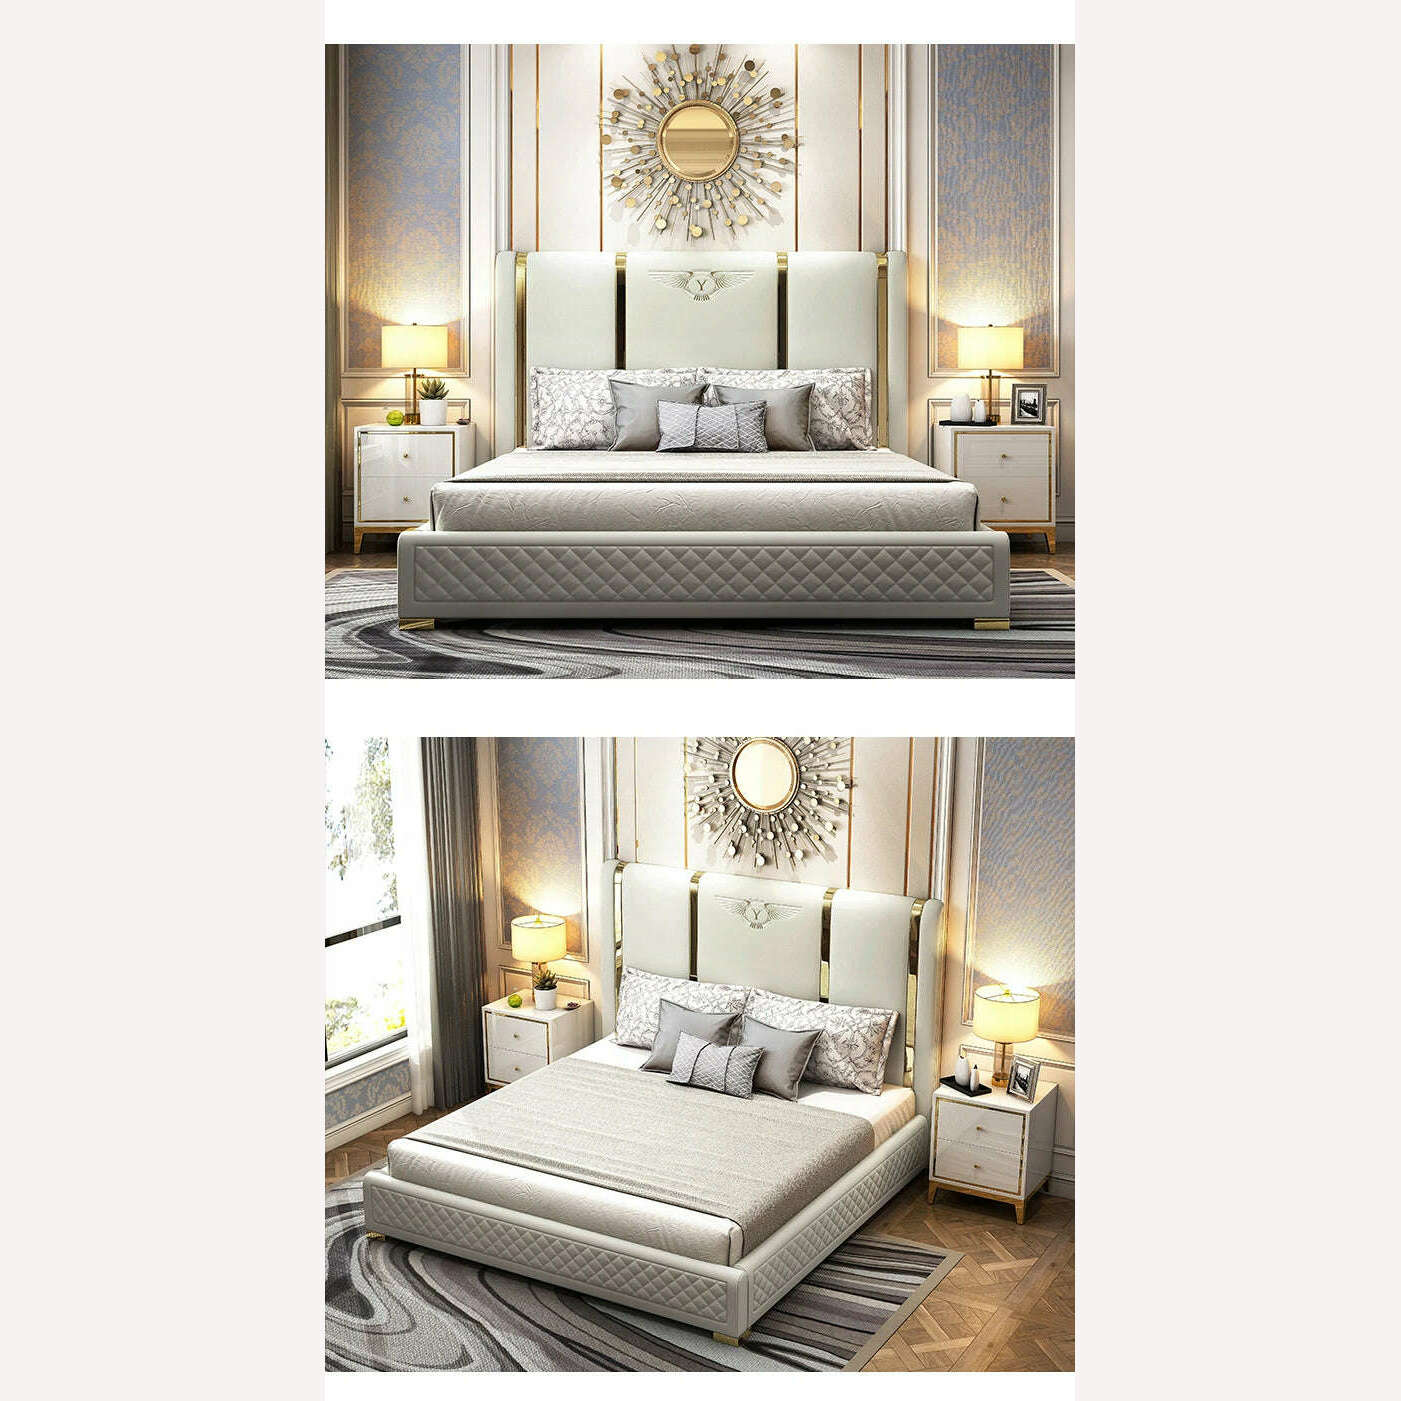 KIMLUD, Genuine Leather entry lux bed frame modern Nordic camas ultimate bed кровать двуспальная lit beds سرير  muebles de dormitorio ме, KIMLUD Women's Clothes